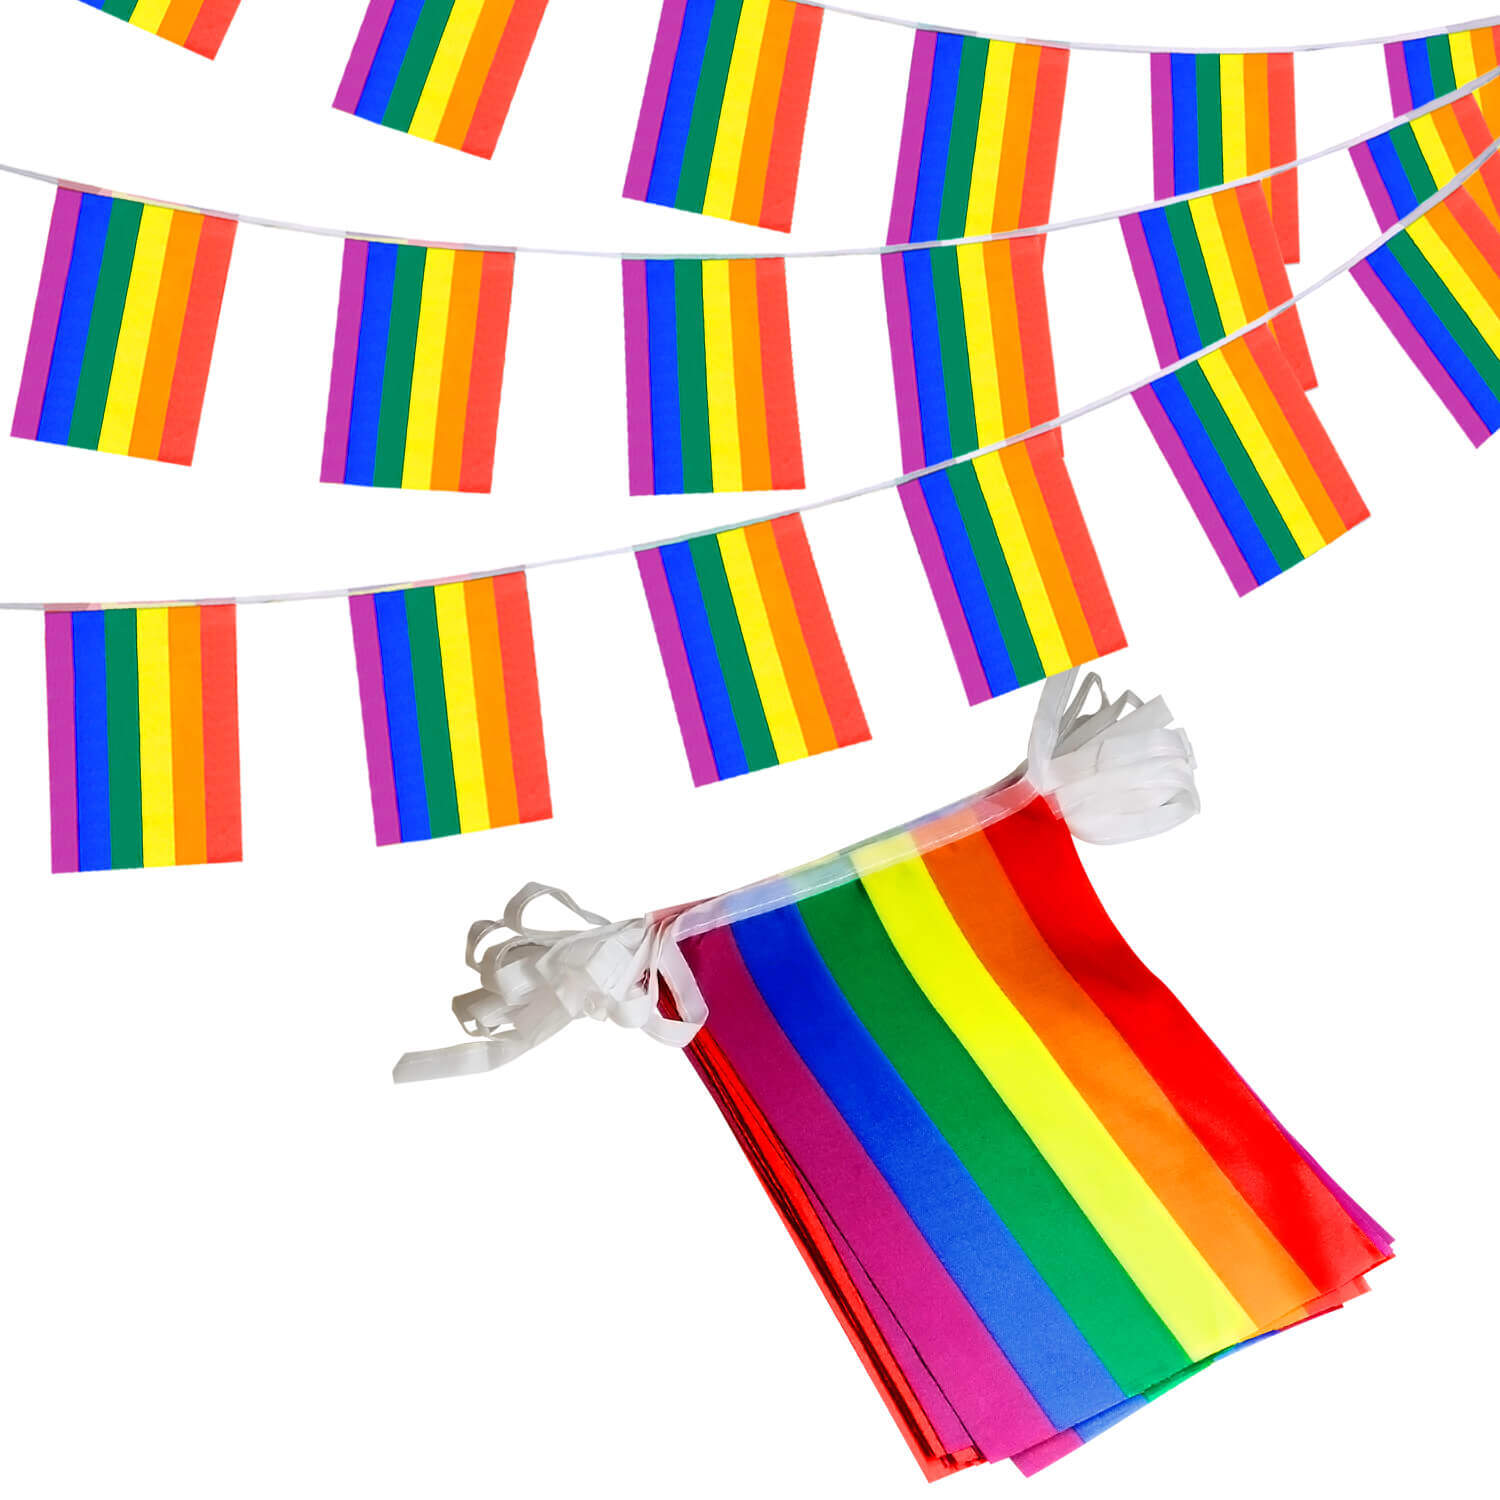 Rainbow LGBT Pride String Flag Pennant Banners - 26 Feet 32 Flags